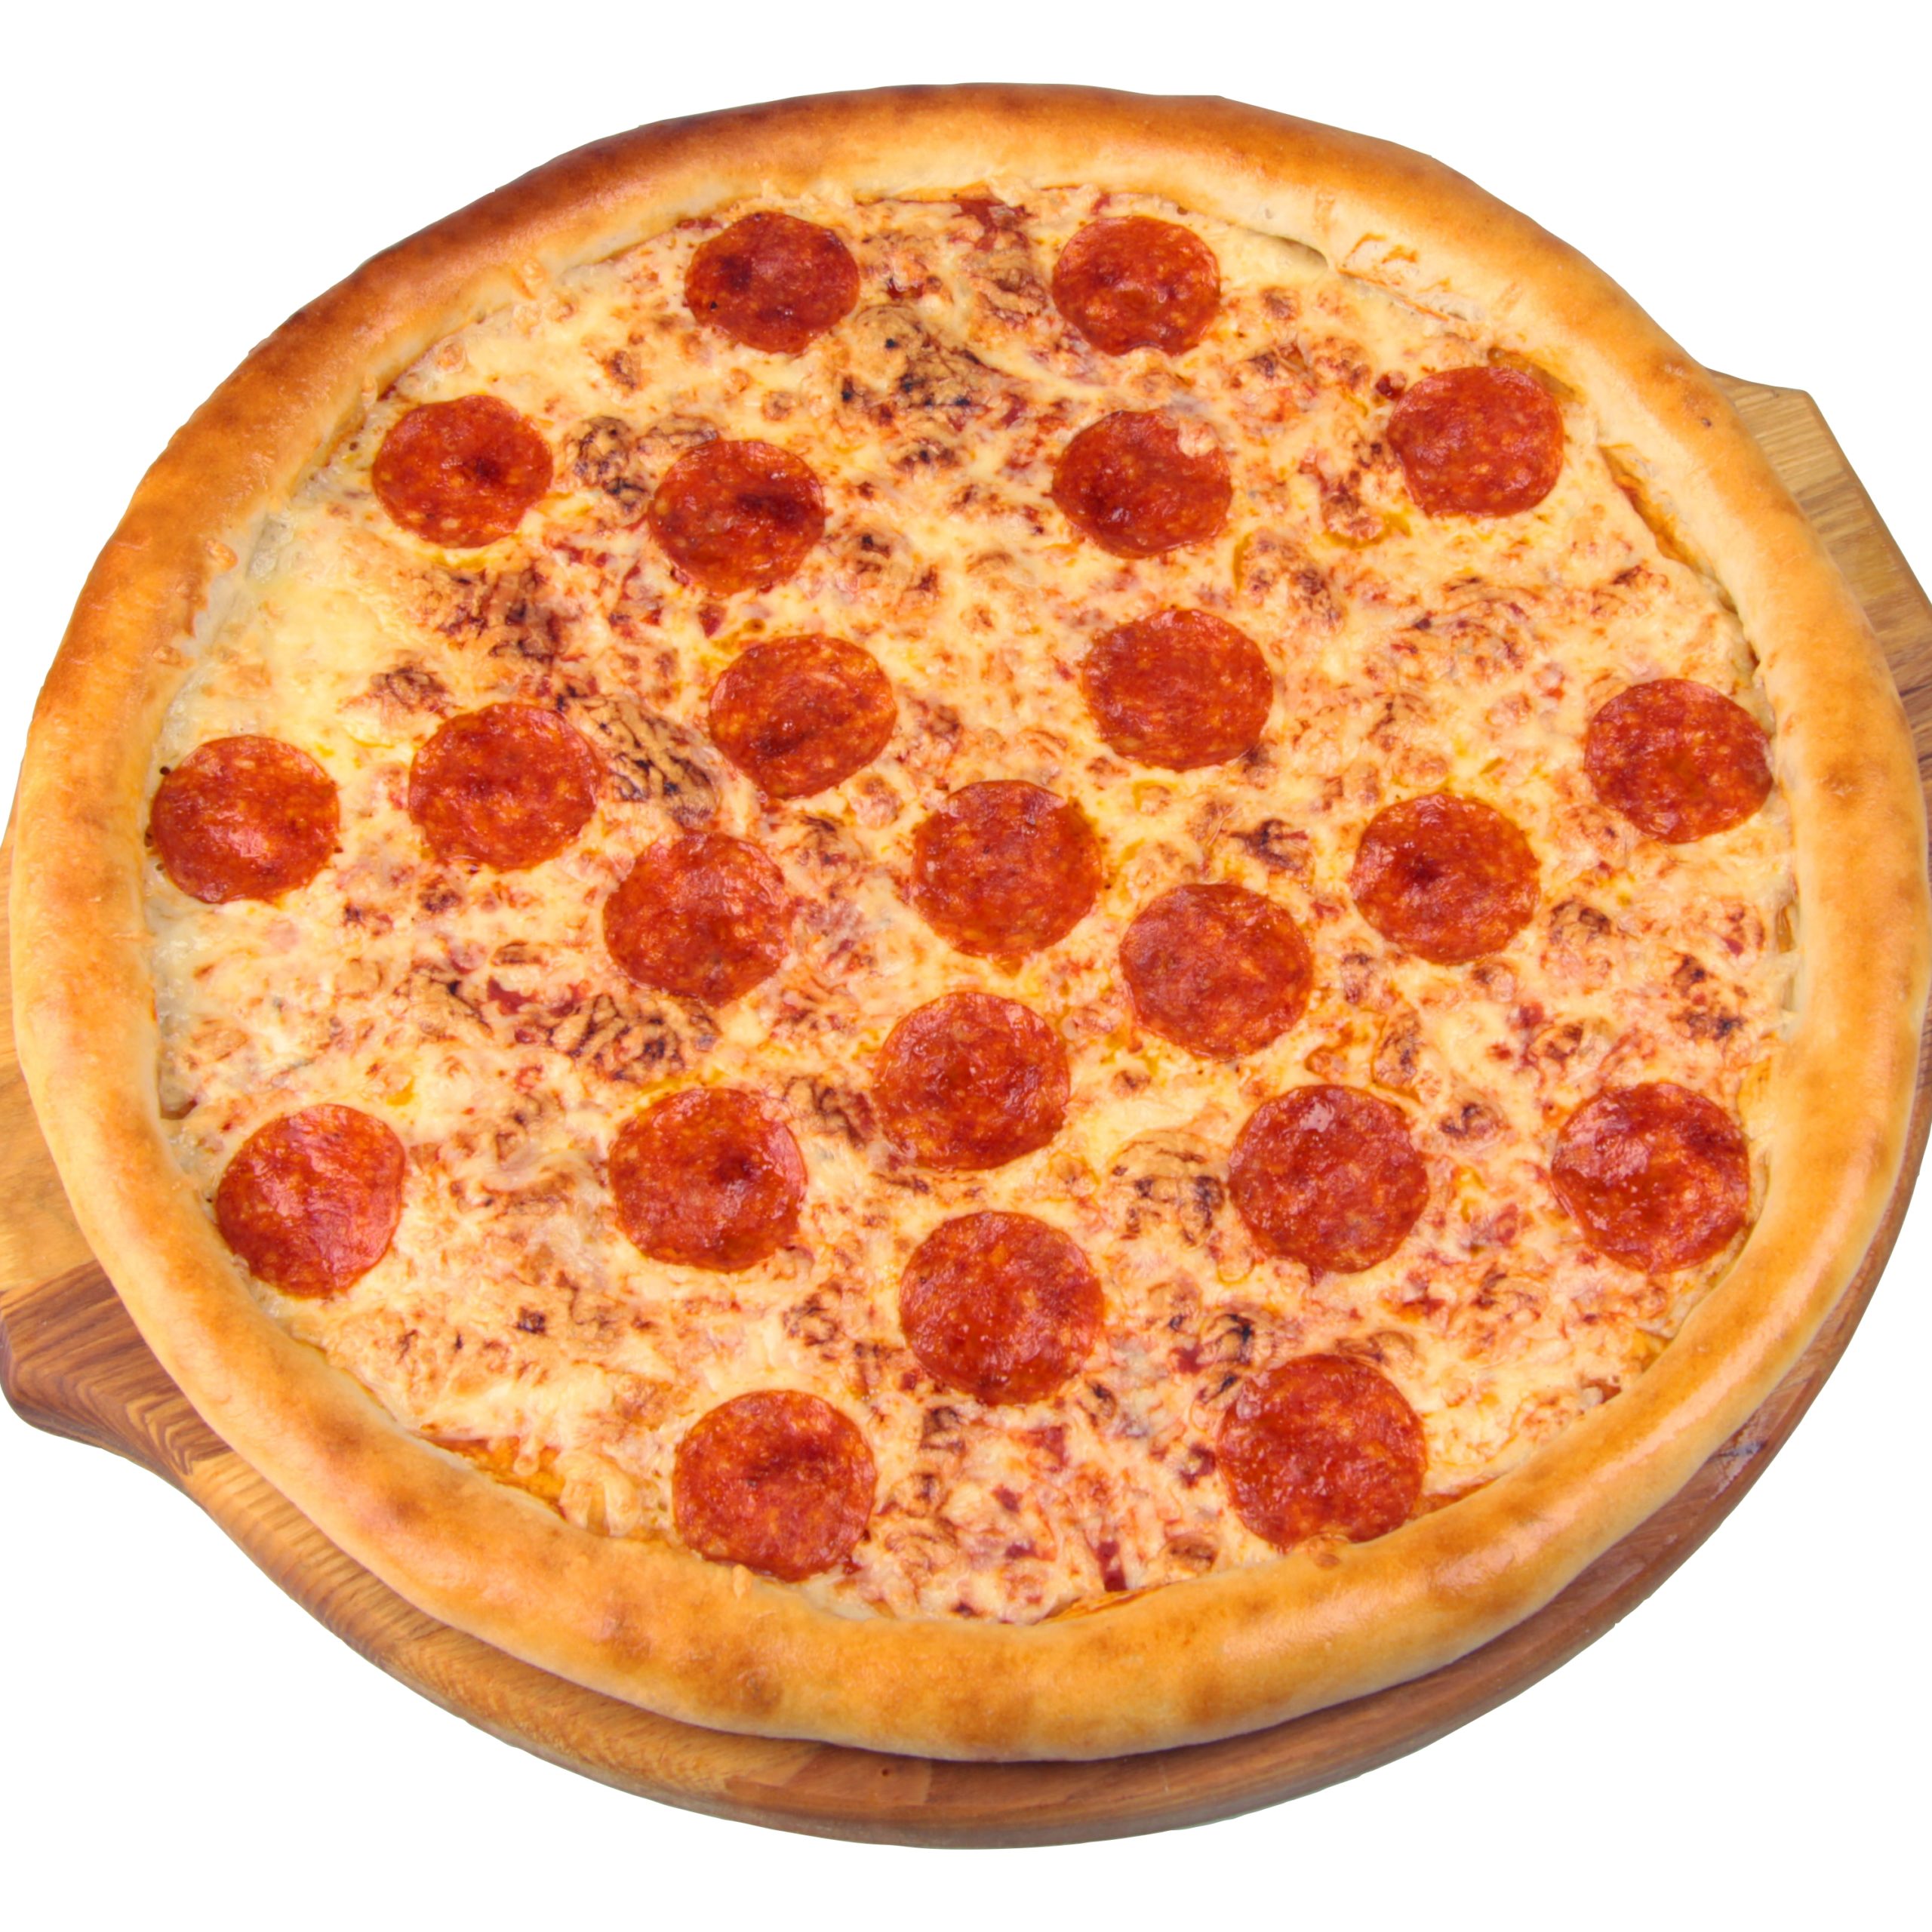 средняя цена пиццы пепперони фото 84